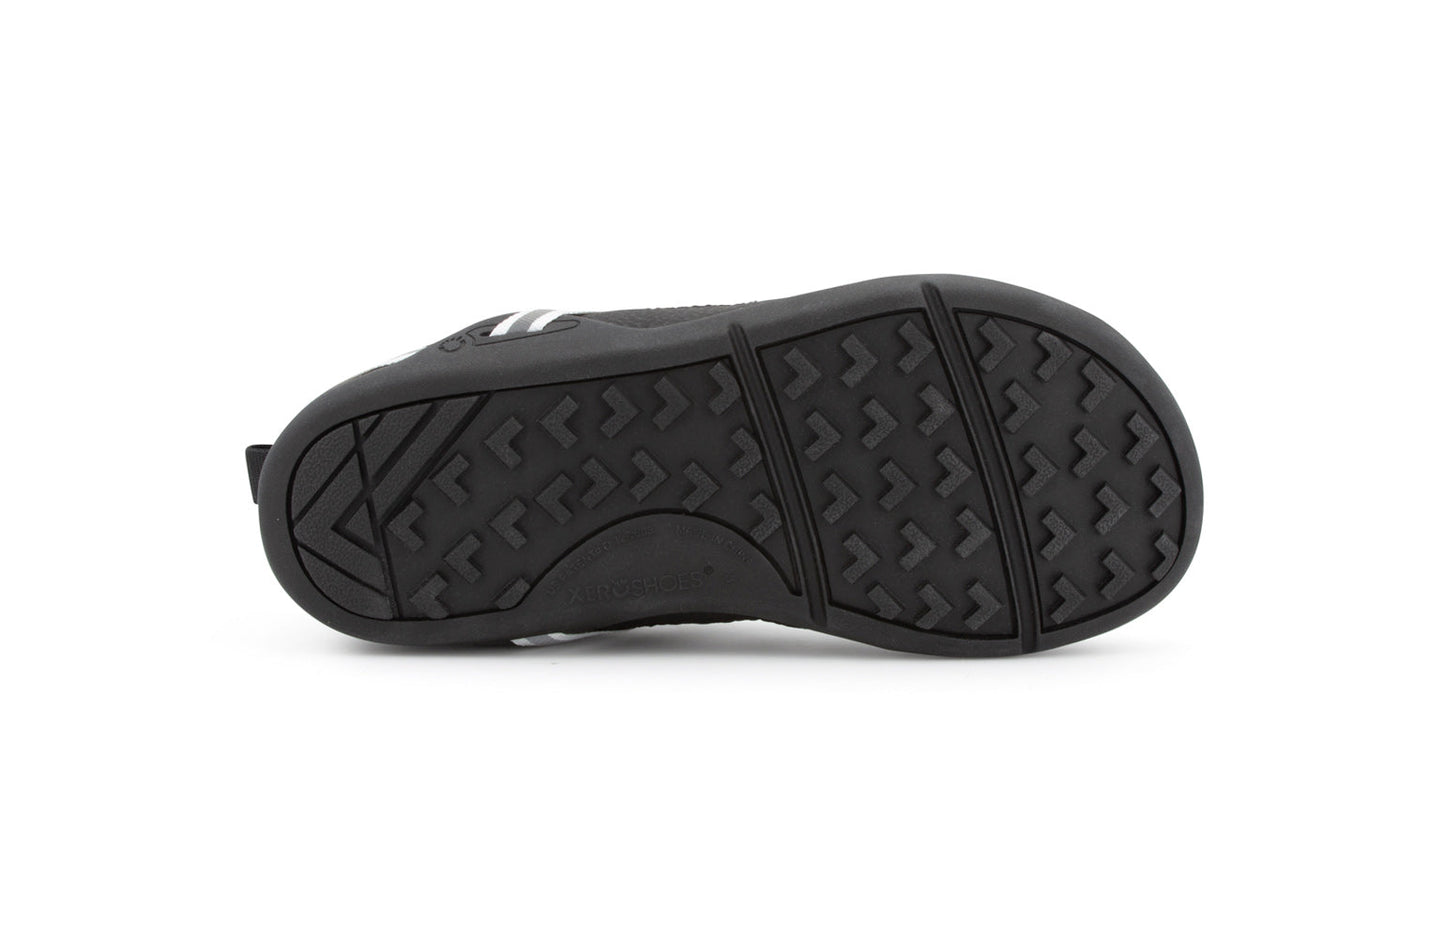 Xero Shoes Prio Kids barfods træningssko/sneakers til børn i farven black/white, saal